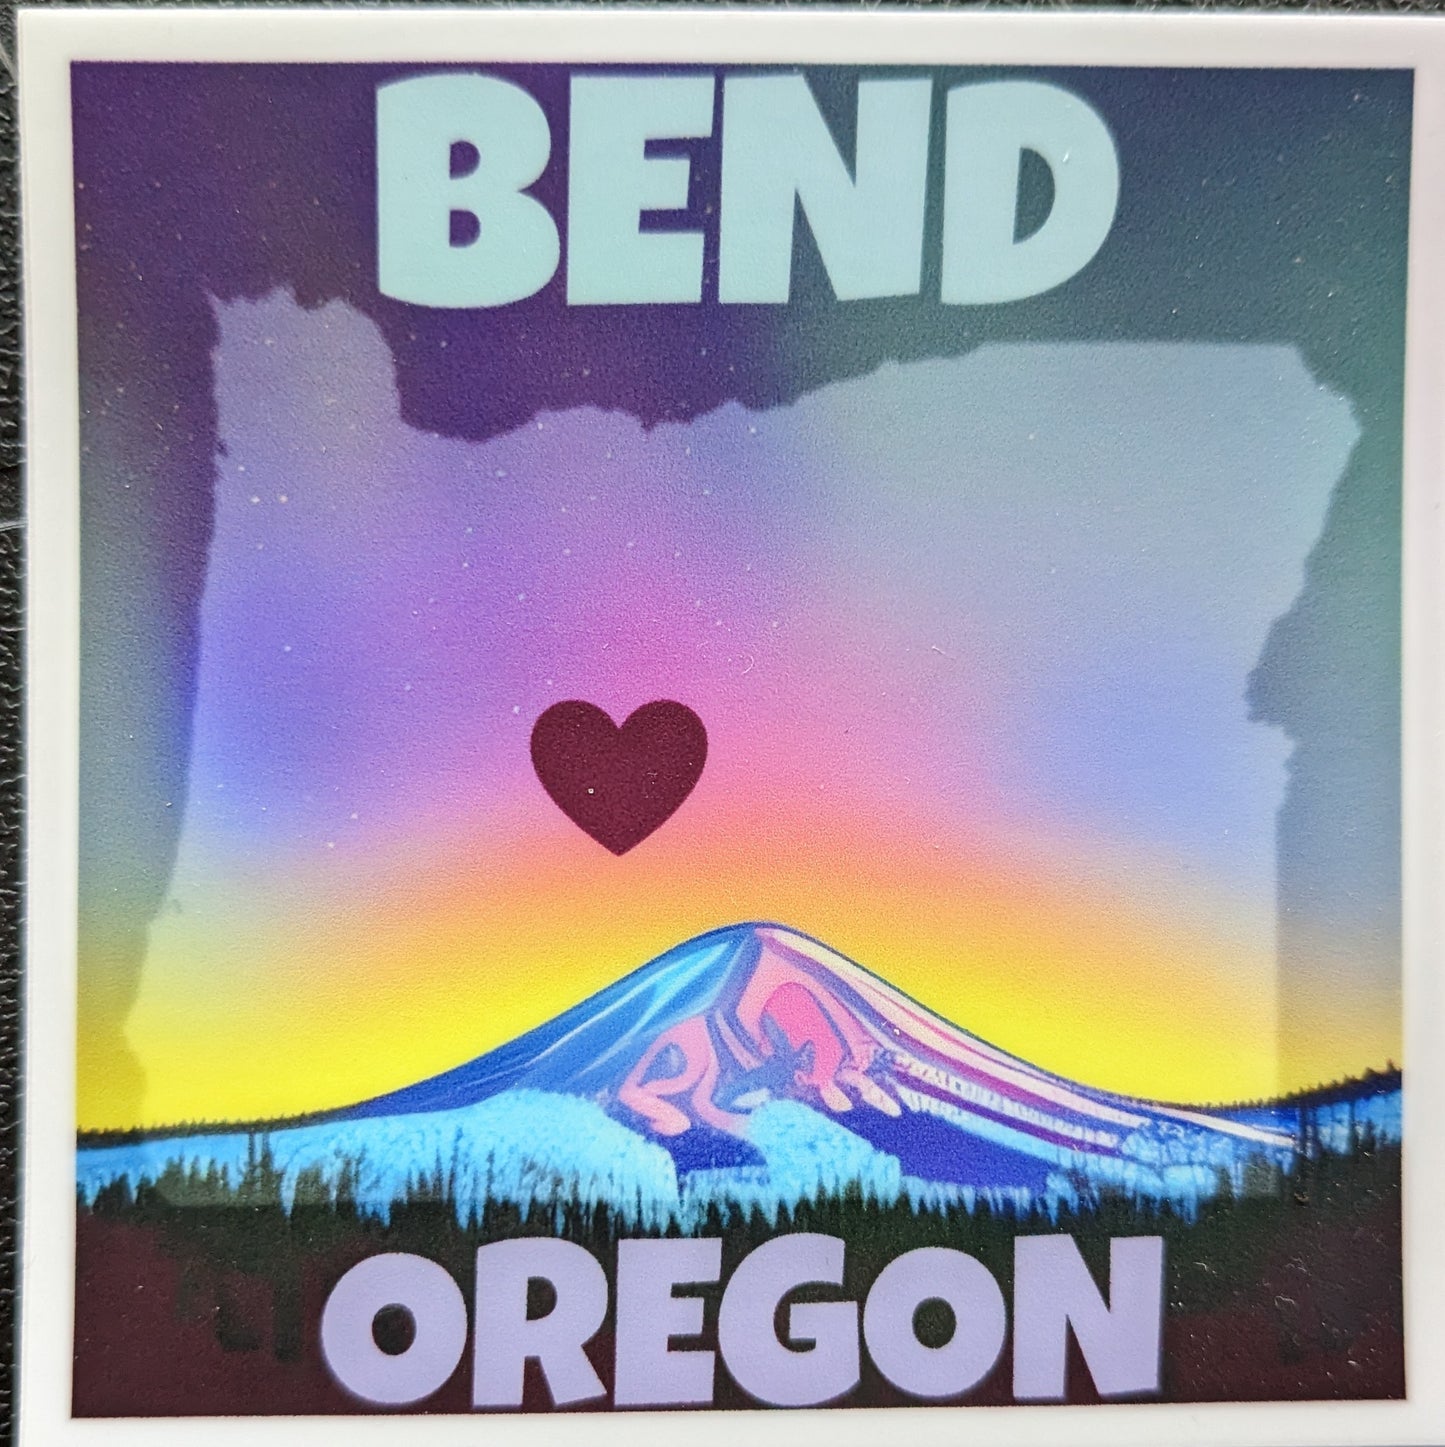 Bend Oregon Heart Mountain